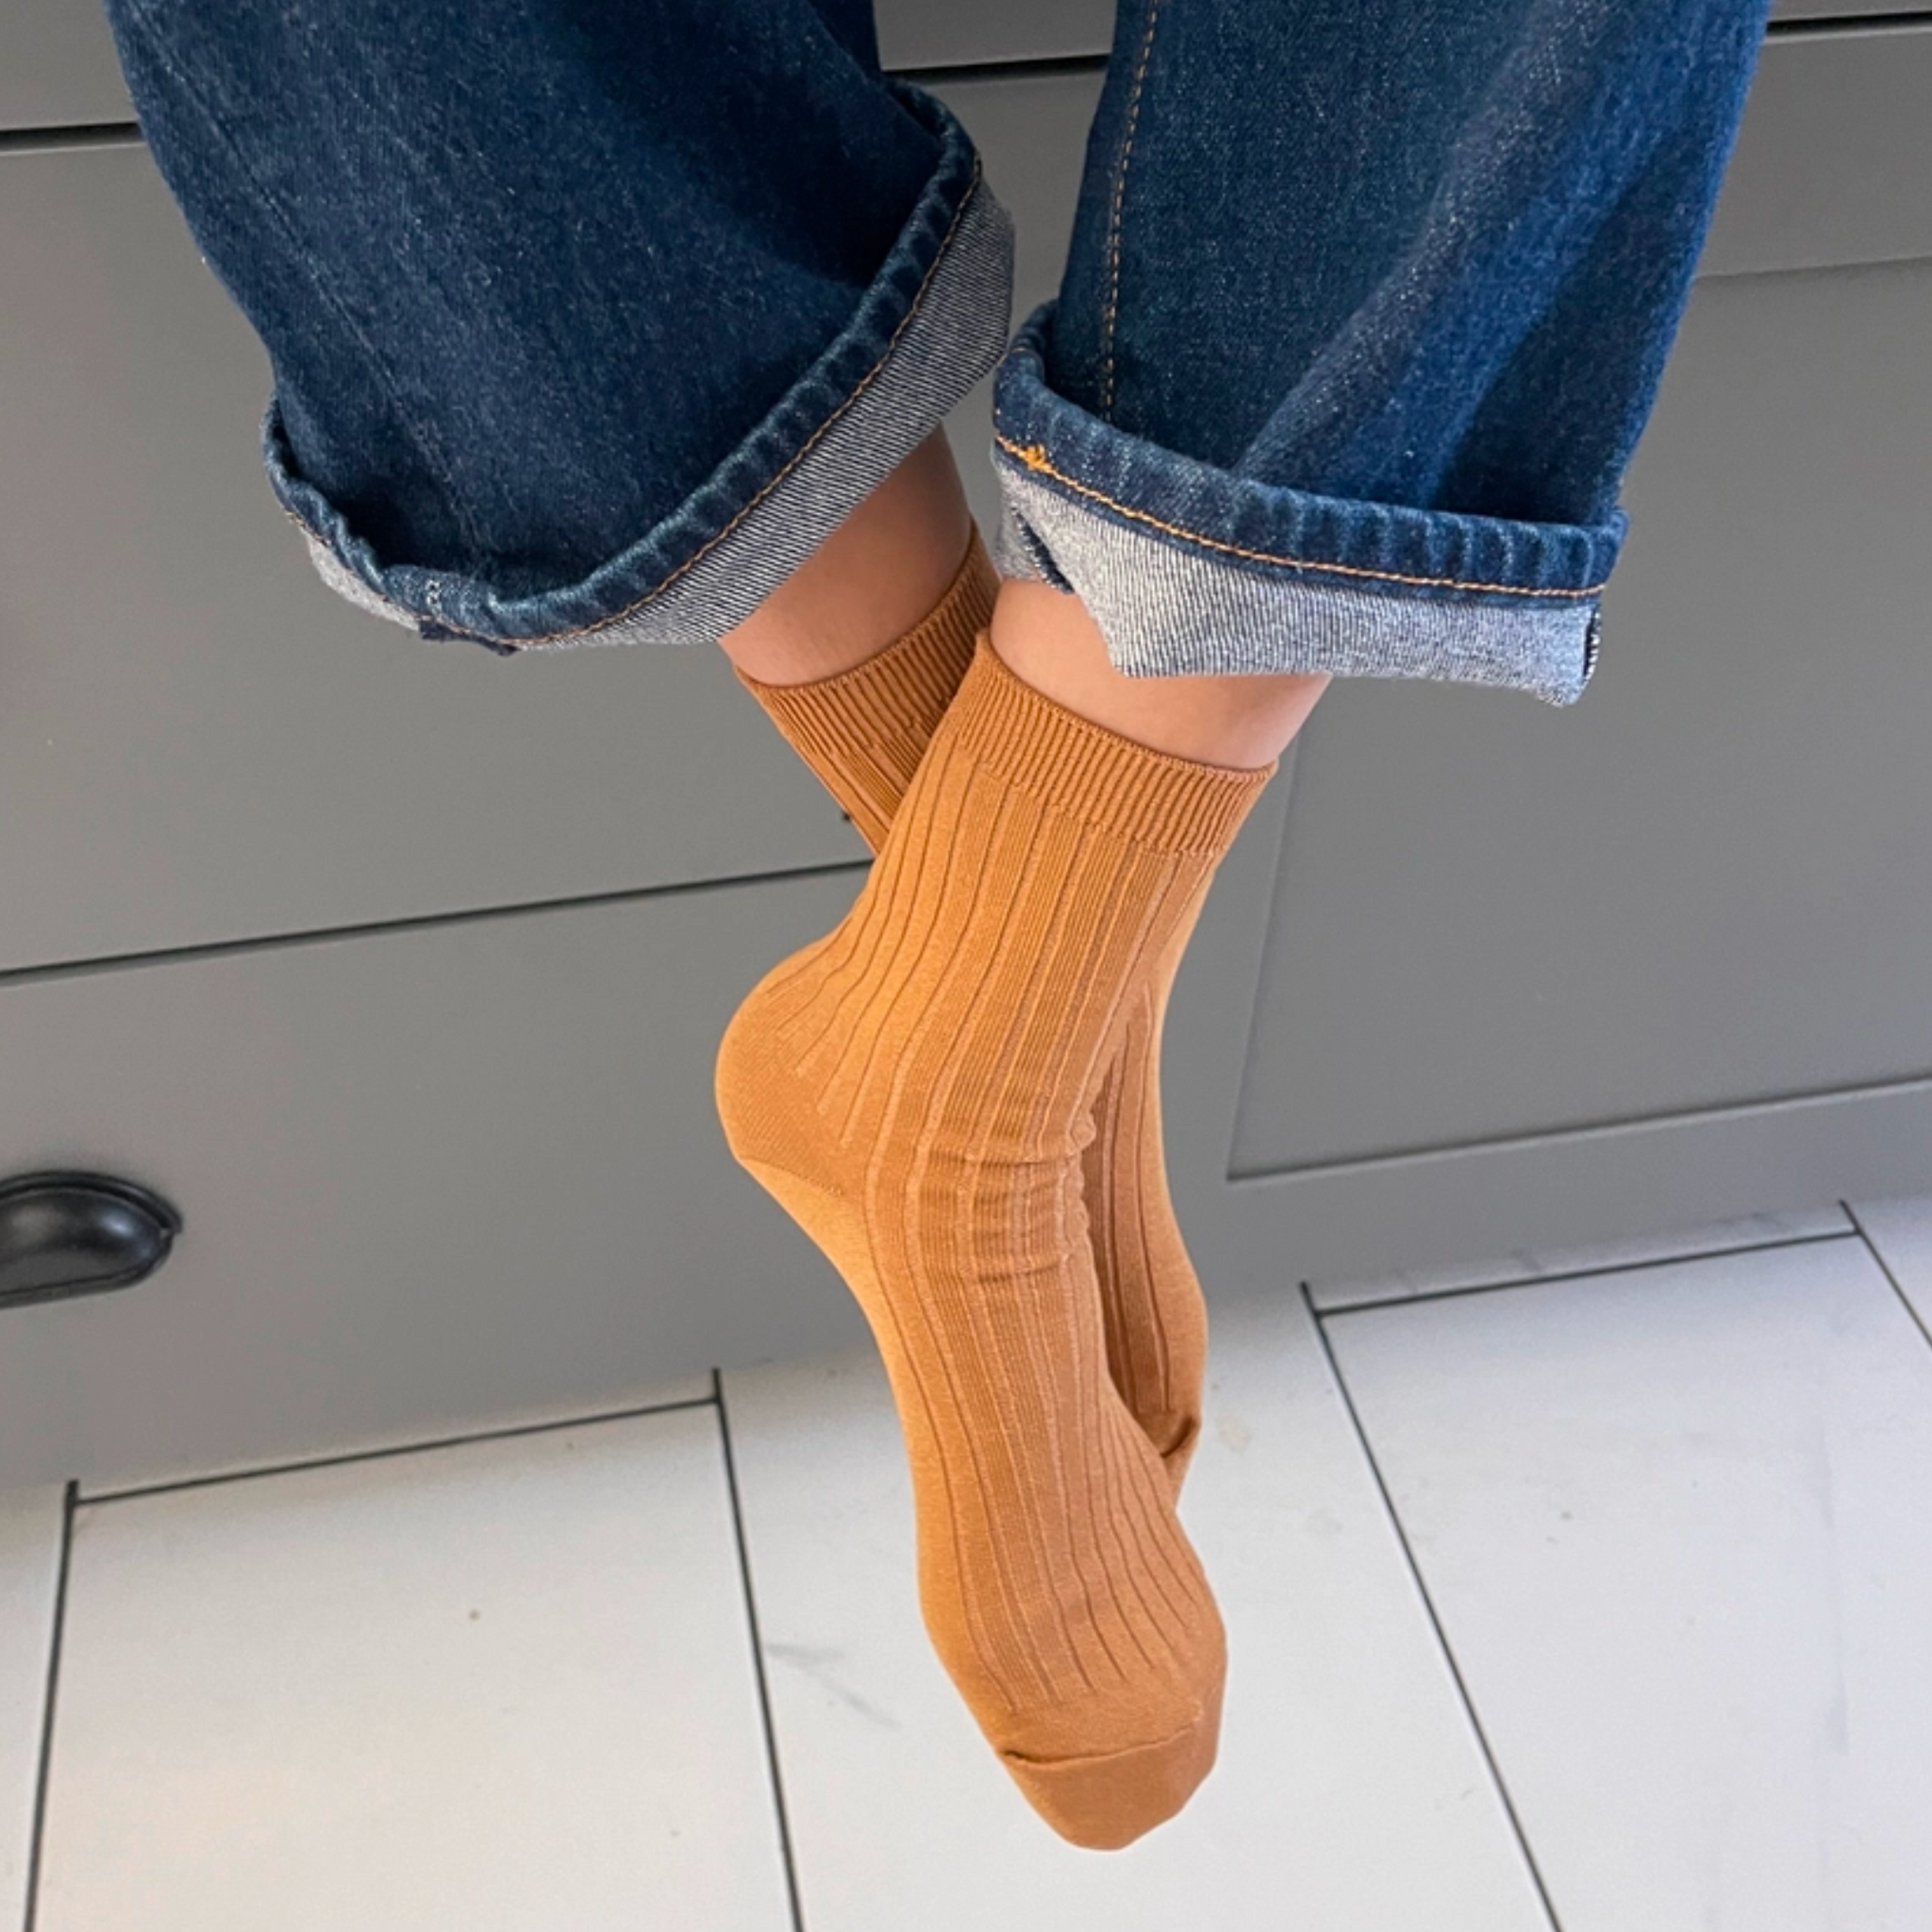 Knit Rib HEr Socks in Peanut Butter